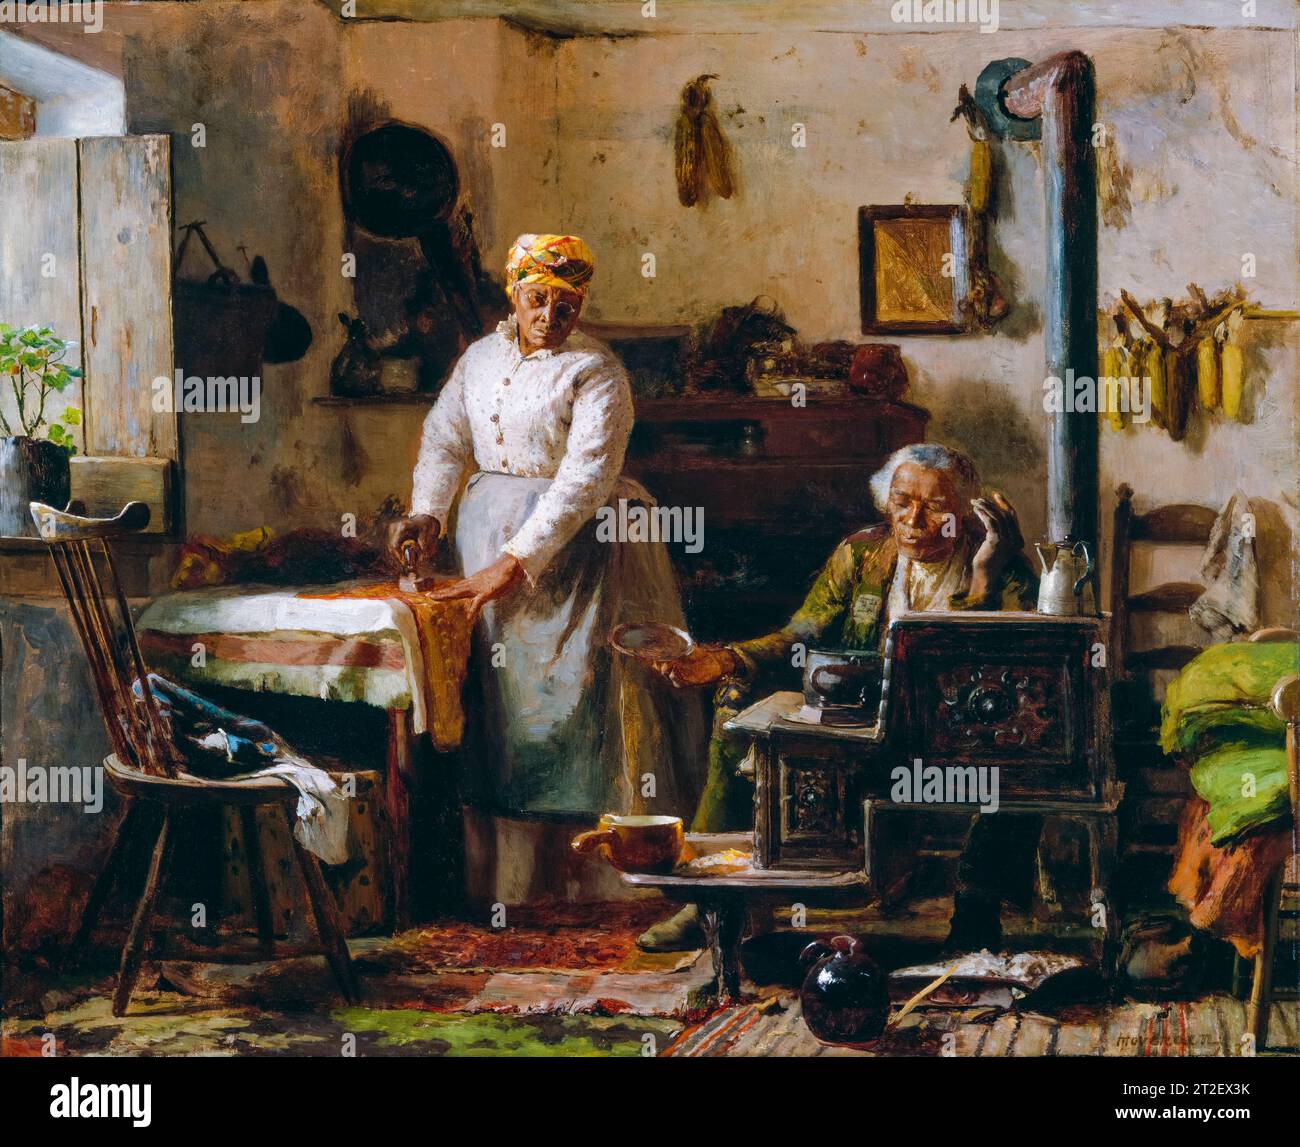 Thomas Hovenden, Chloe e Sam, pittura ad olio su tela, 1882 Foto Stock